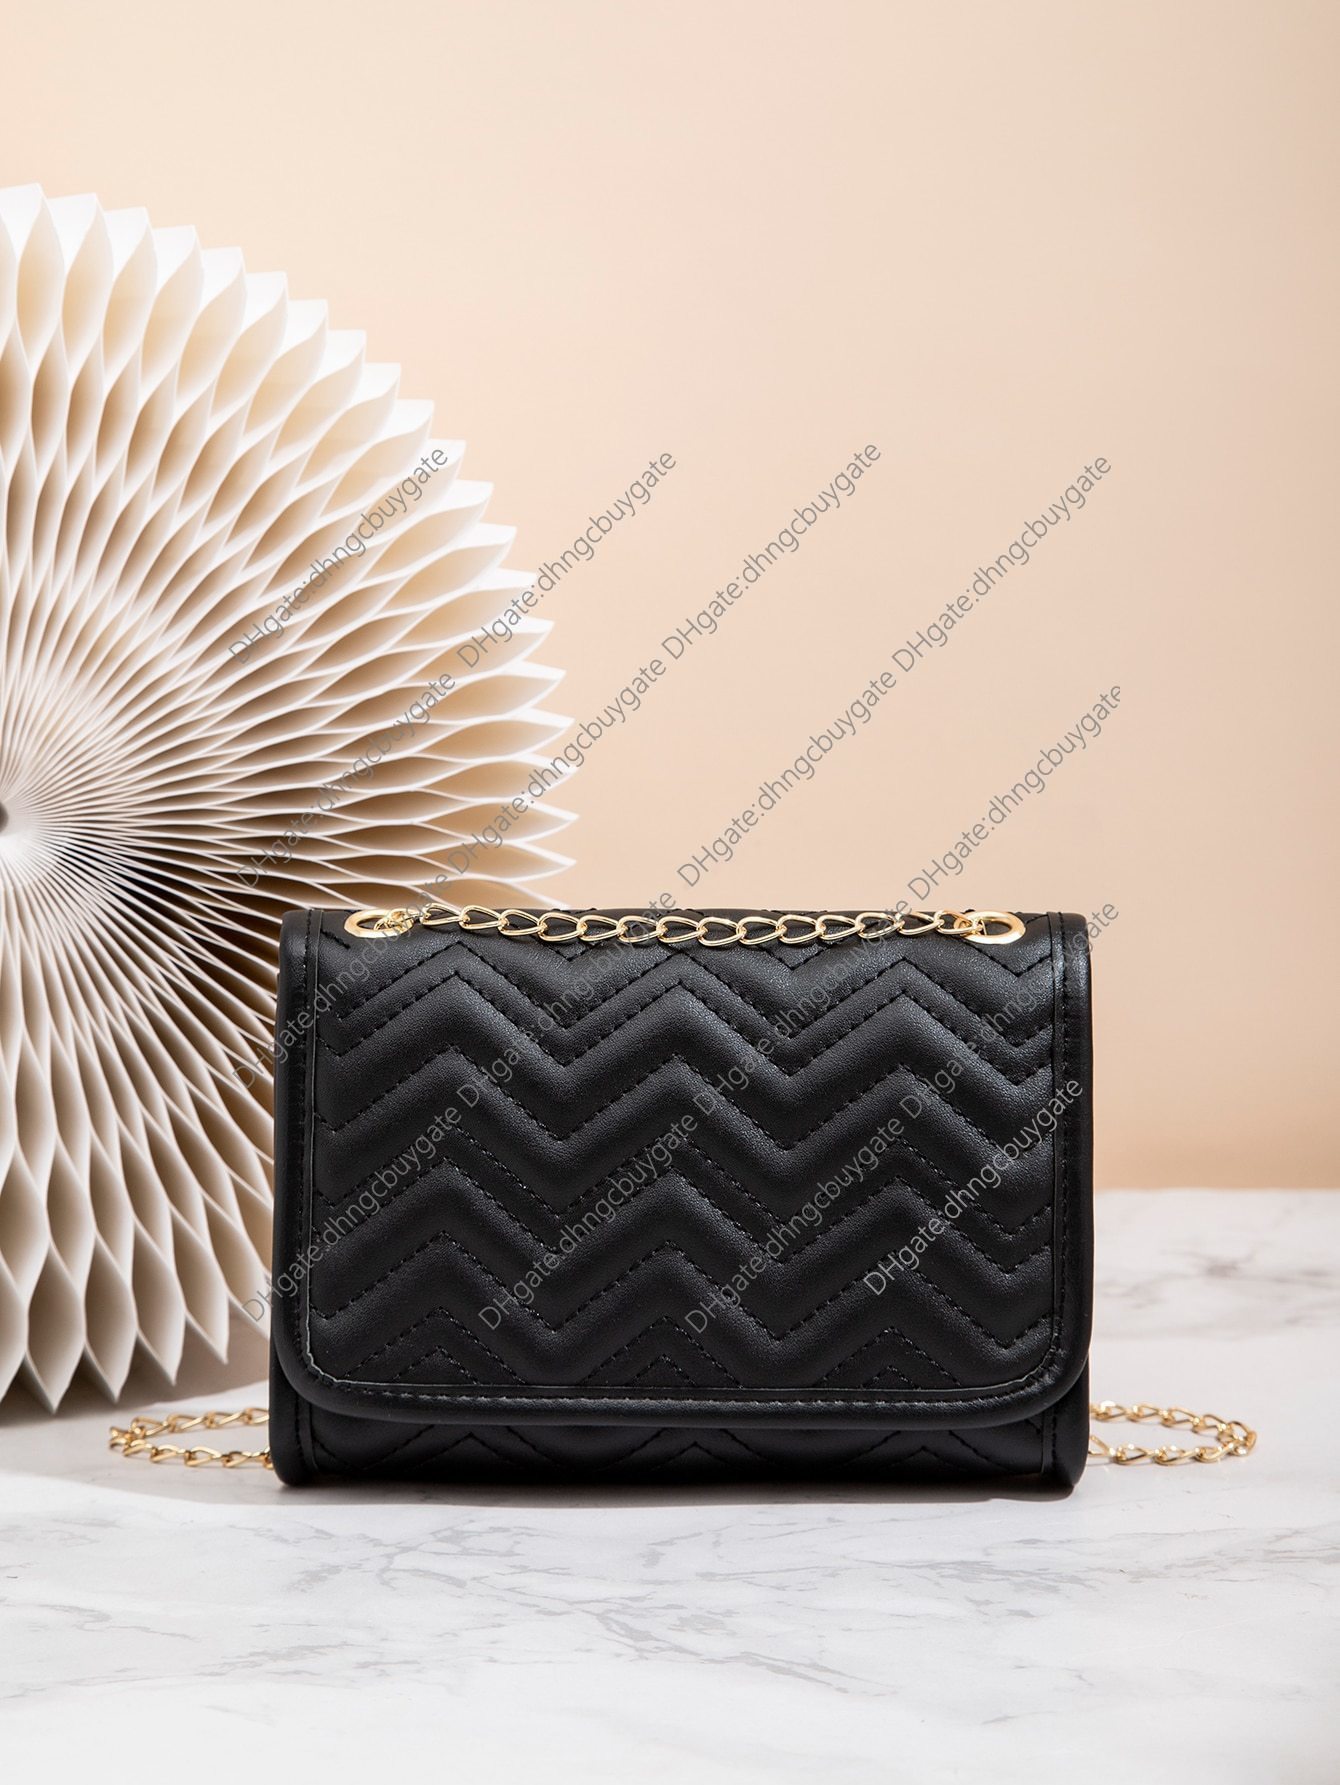 

Bag Chevron Designer Flap Square Handbag Leather Luxury Brand Fashion Wallet crossbody bag Handbag Leather, Black